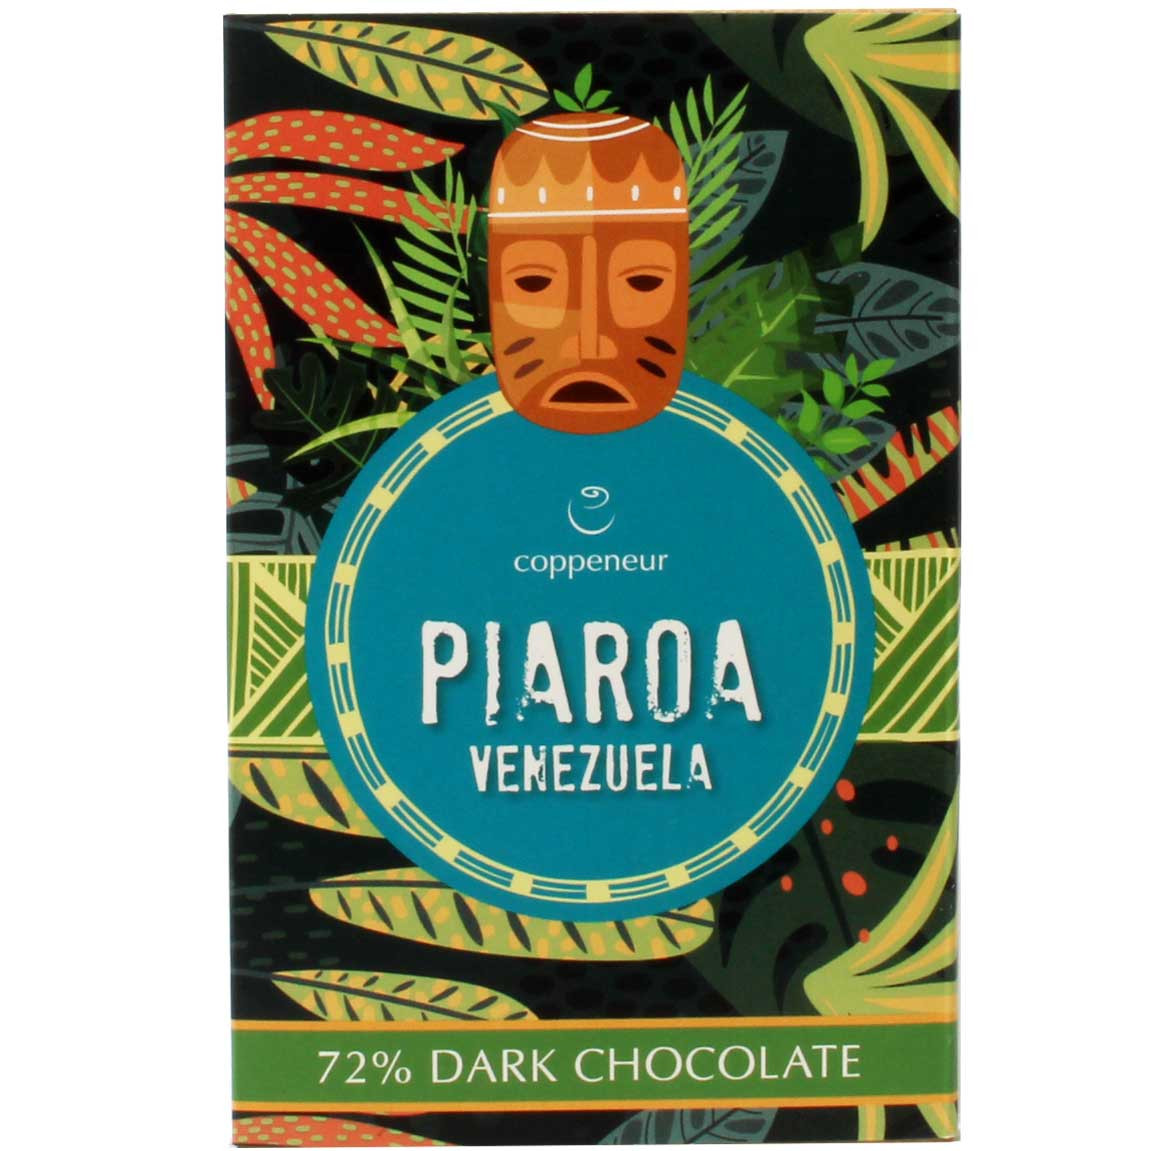 Piaroa Venezuela 72% chocolat noir - Tablette de chocolat, Allemagne, chocolat allemand - Chocolats-De-Luxe